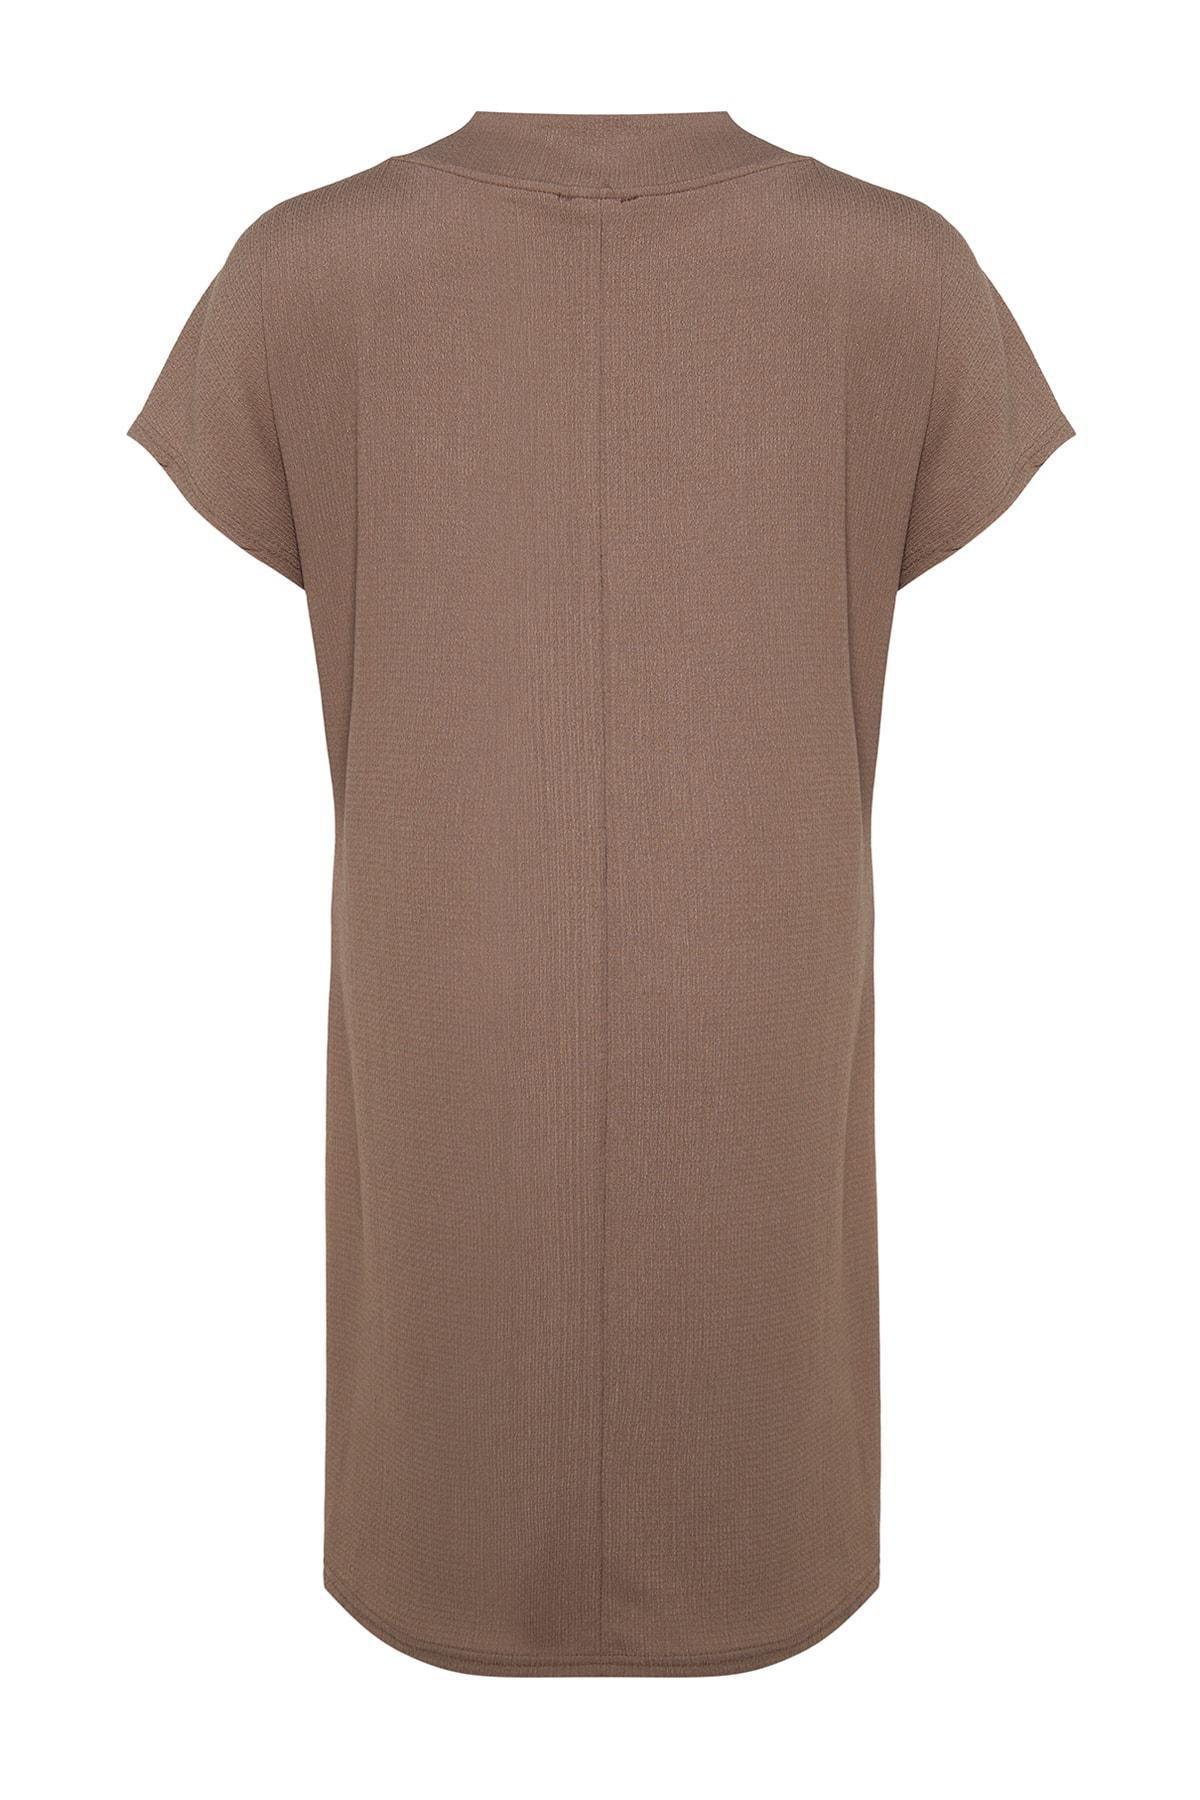 Trendyol - Brown Basic Plus Size Mini Dress